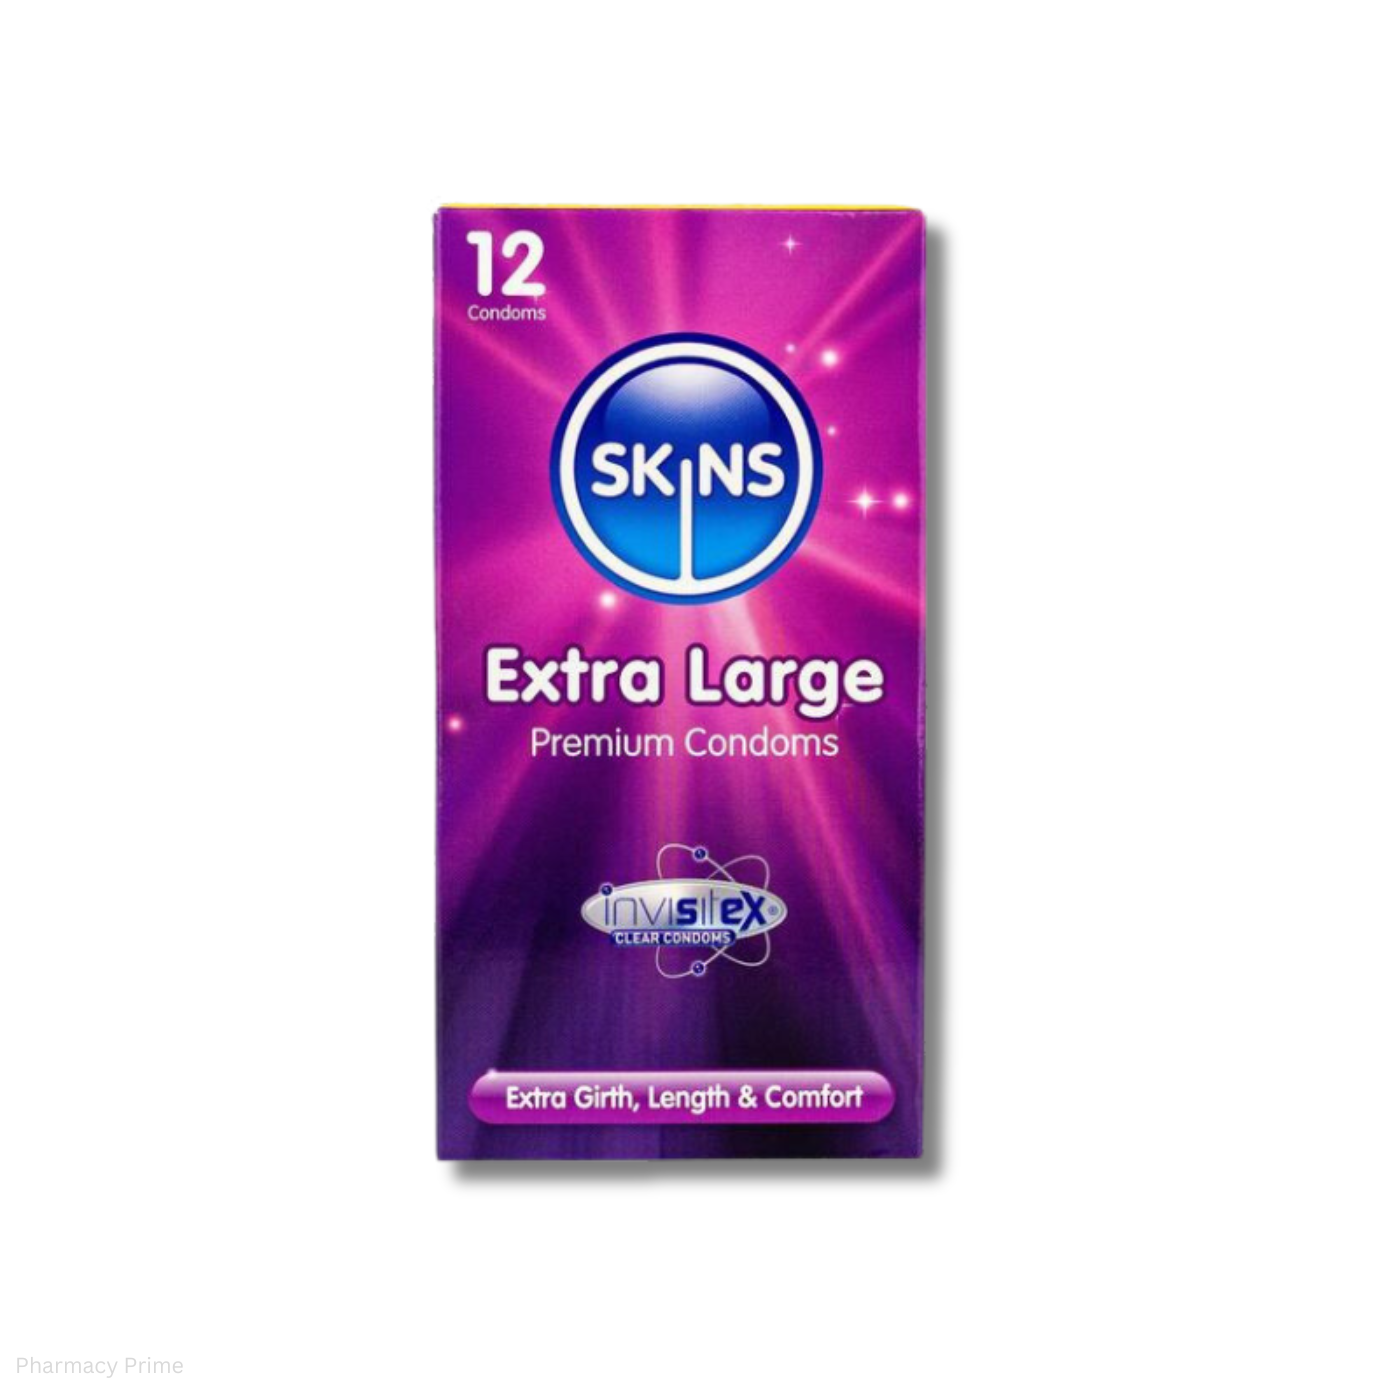 Skins Extra Large - 12 Condoms